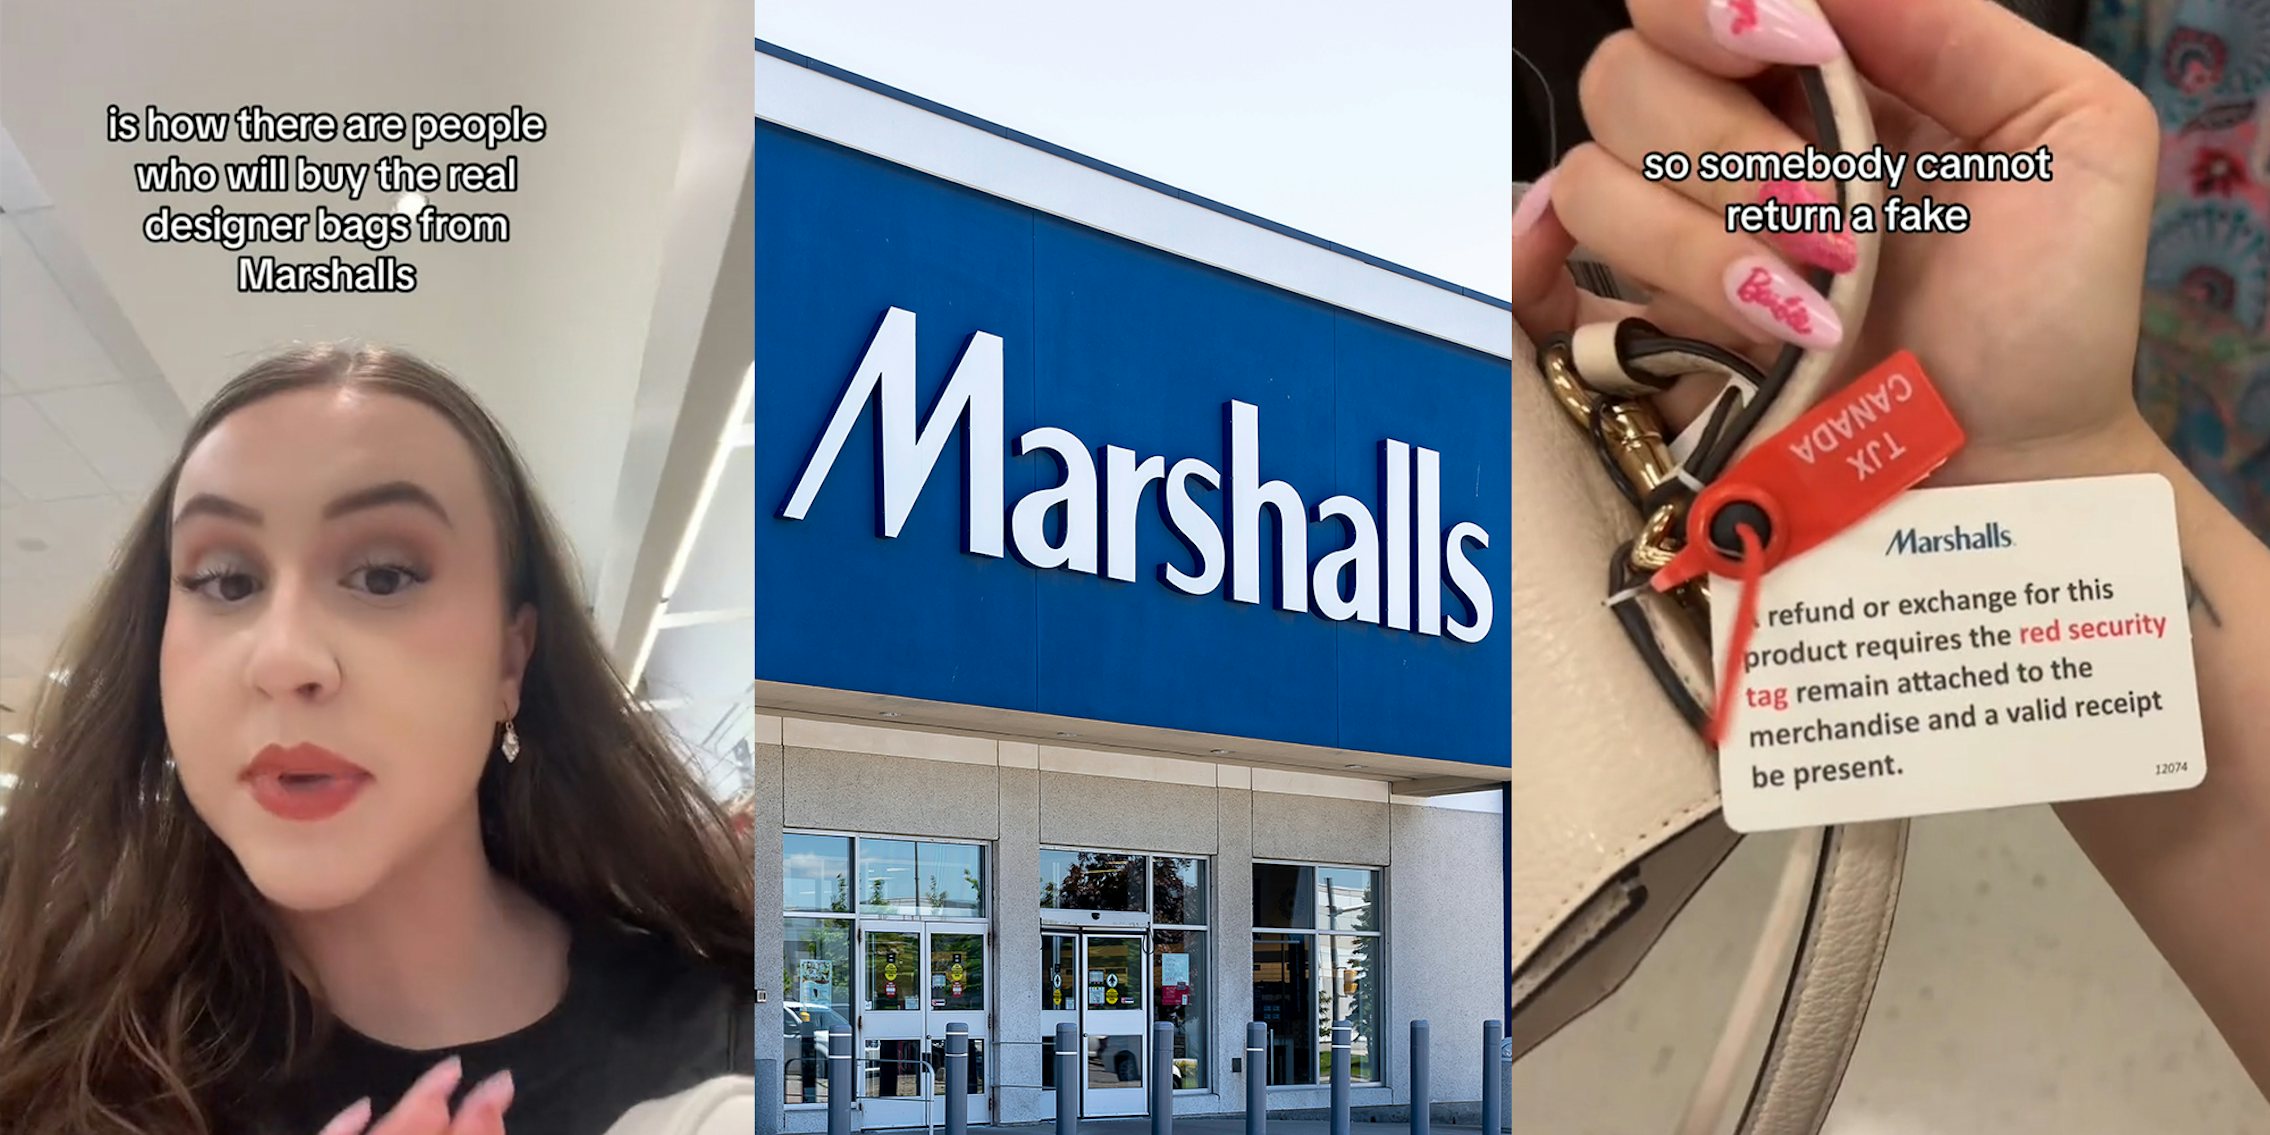 Shopper Shows How Marshalls is Preventing Return of Fake Bags